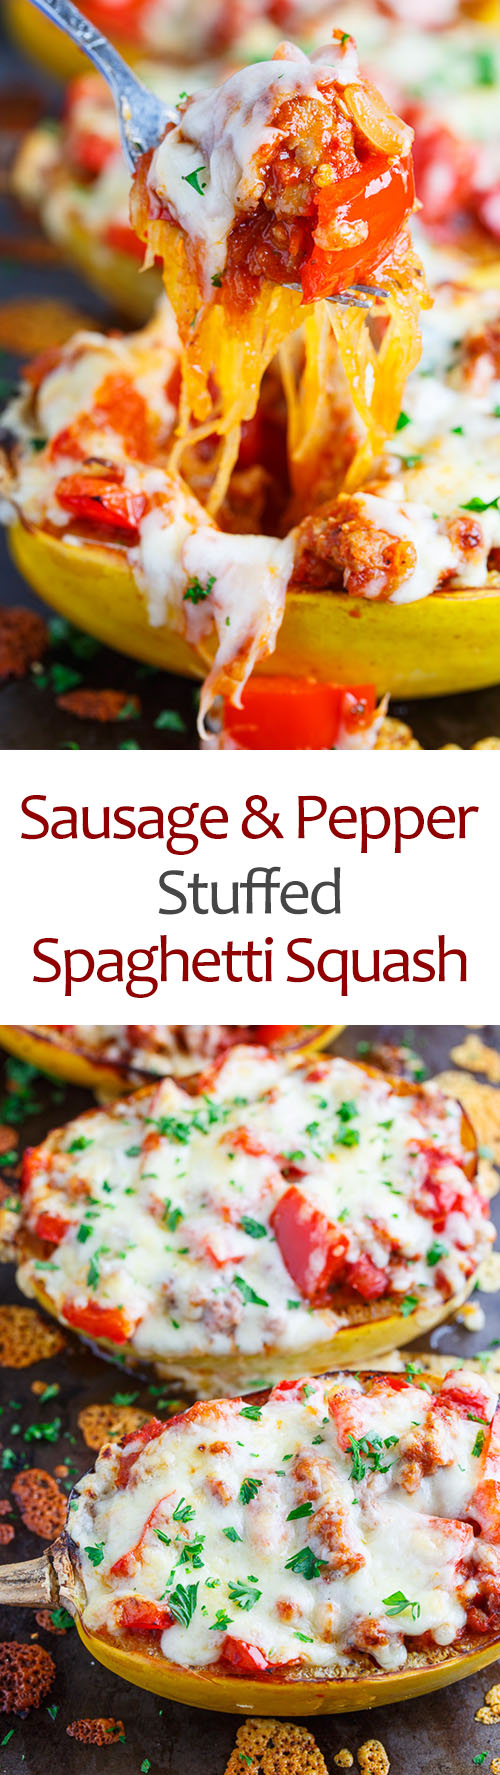 Sausage and Pepper Stuffed Spaghetti Squash